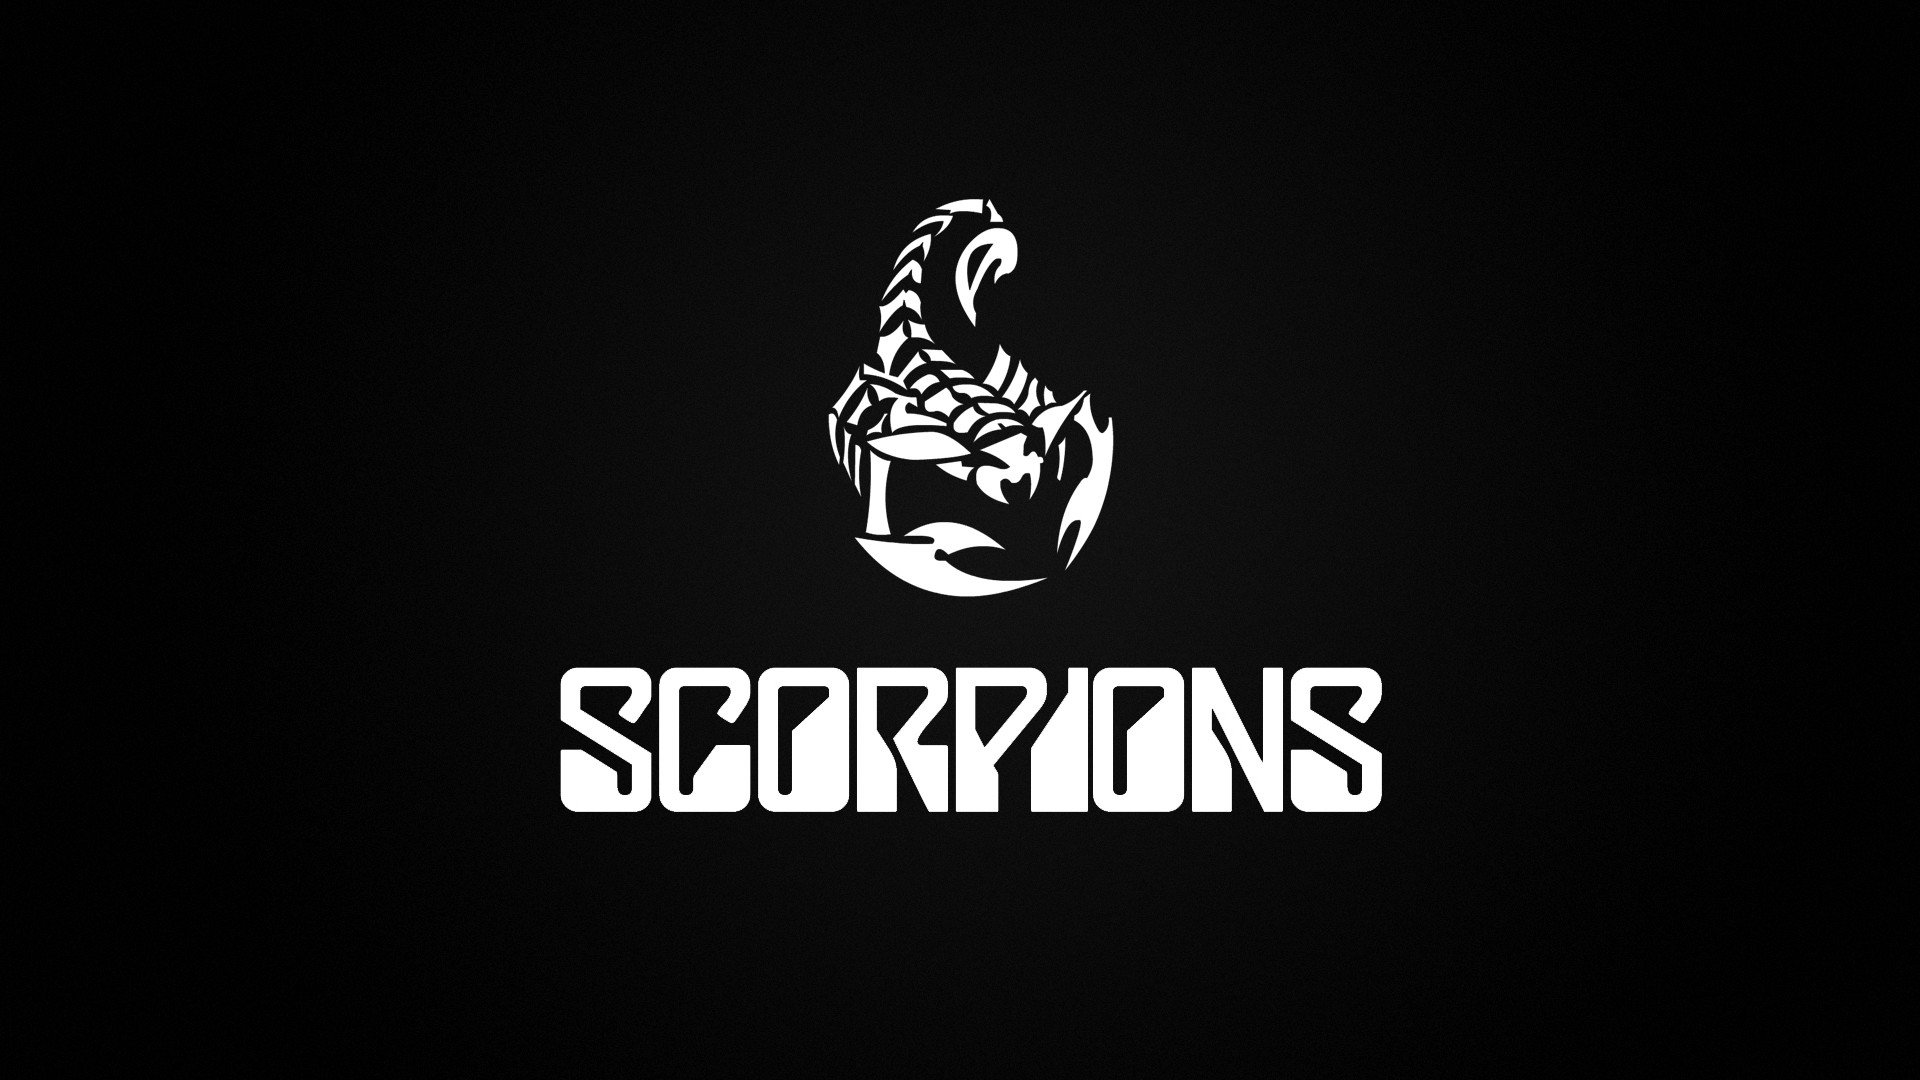 Scorpions HD Wallpaper Background Image Id